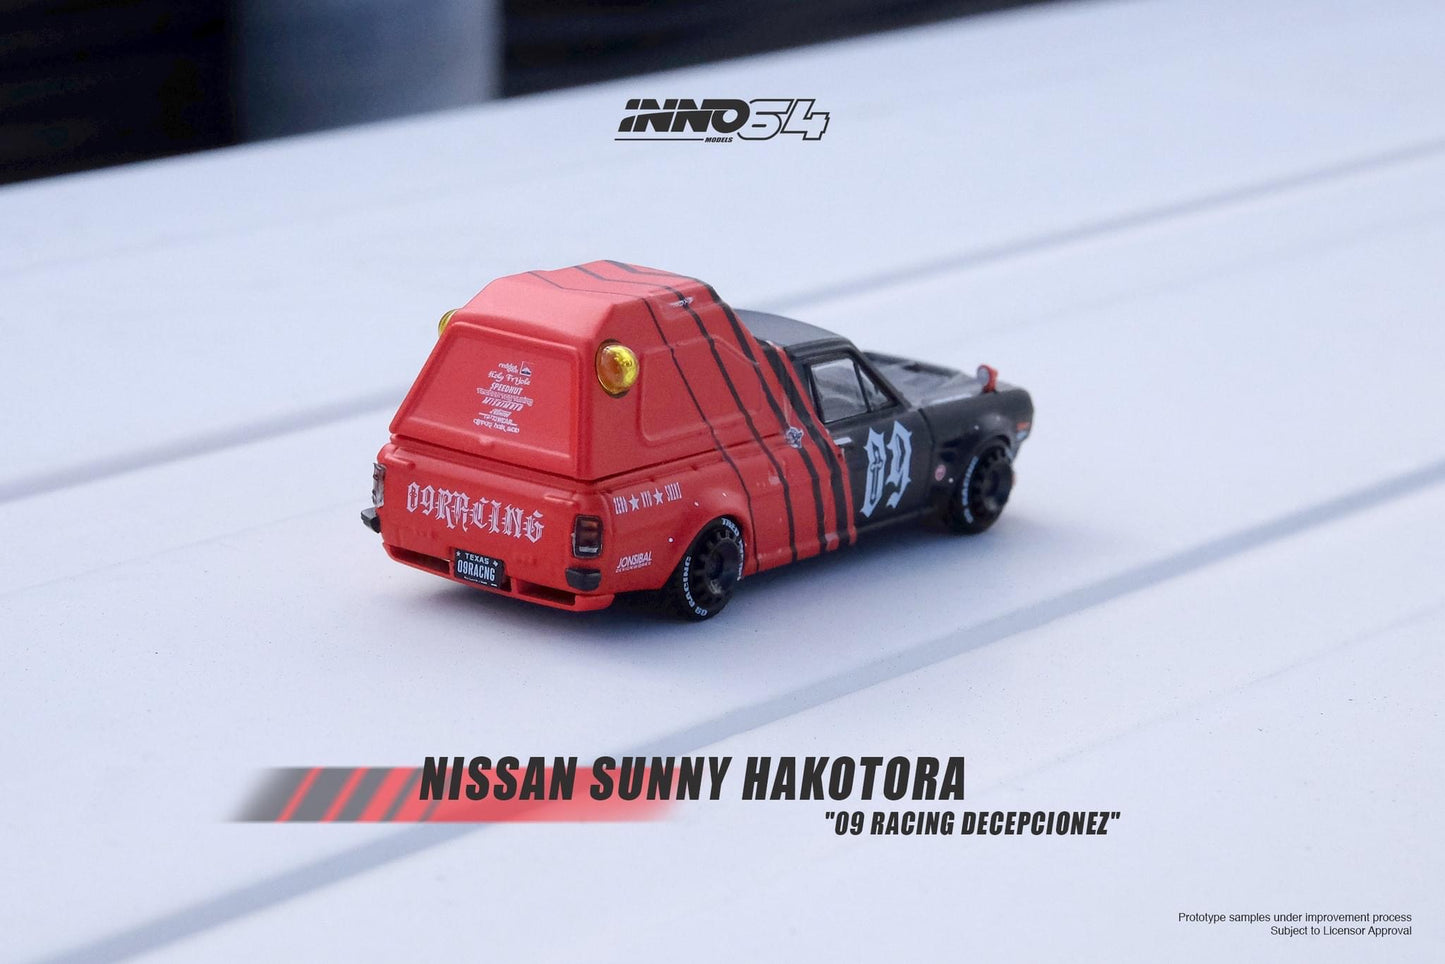 Inno64 X 09Racing 1:64 Nissan Sunny Hakatora 09 Racing Decepcionez